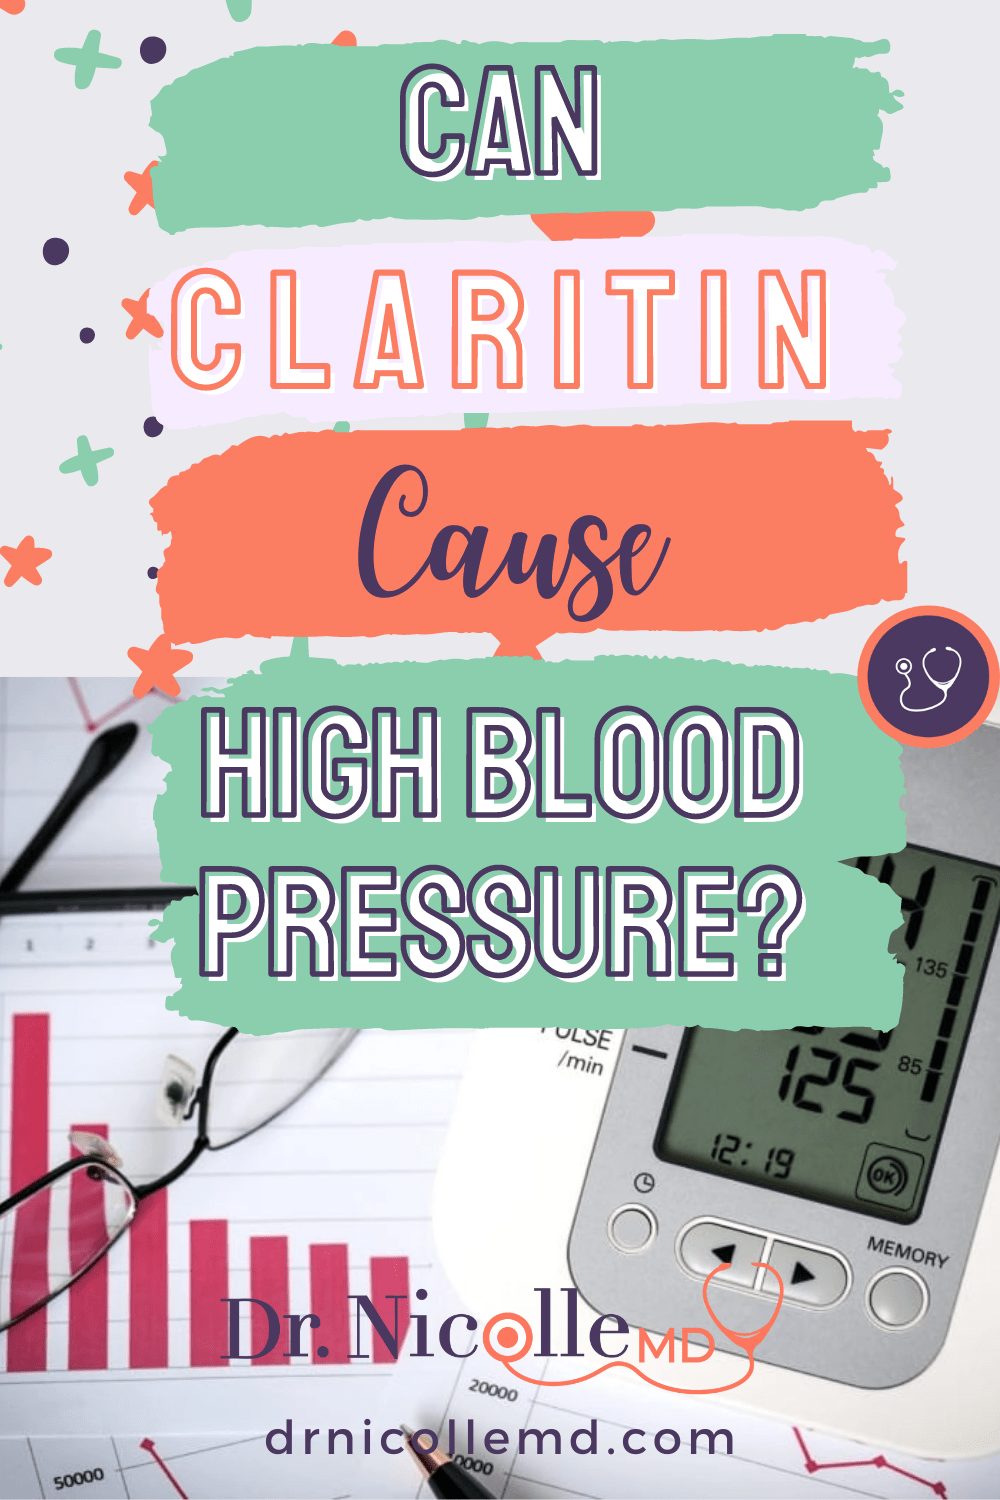 Can Claritin Cause High Blood Pressure?